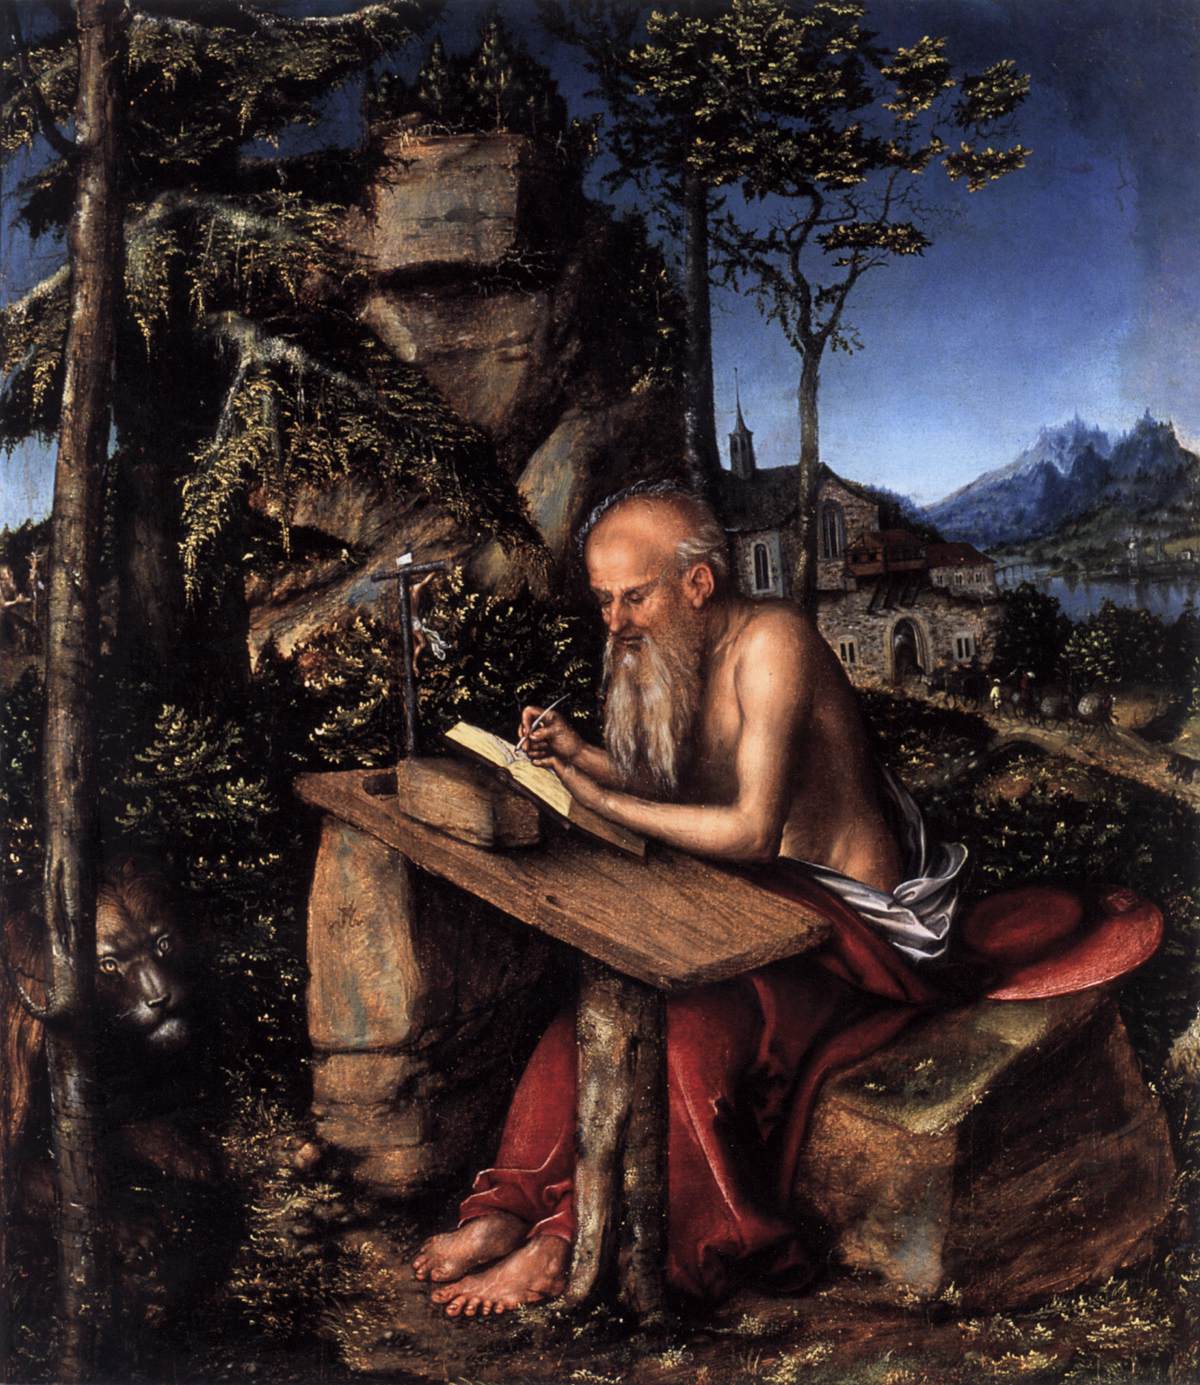 Saint Jerome Writing in a Landscape